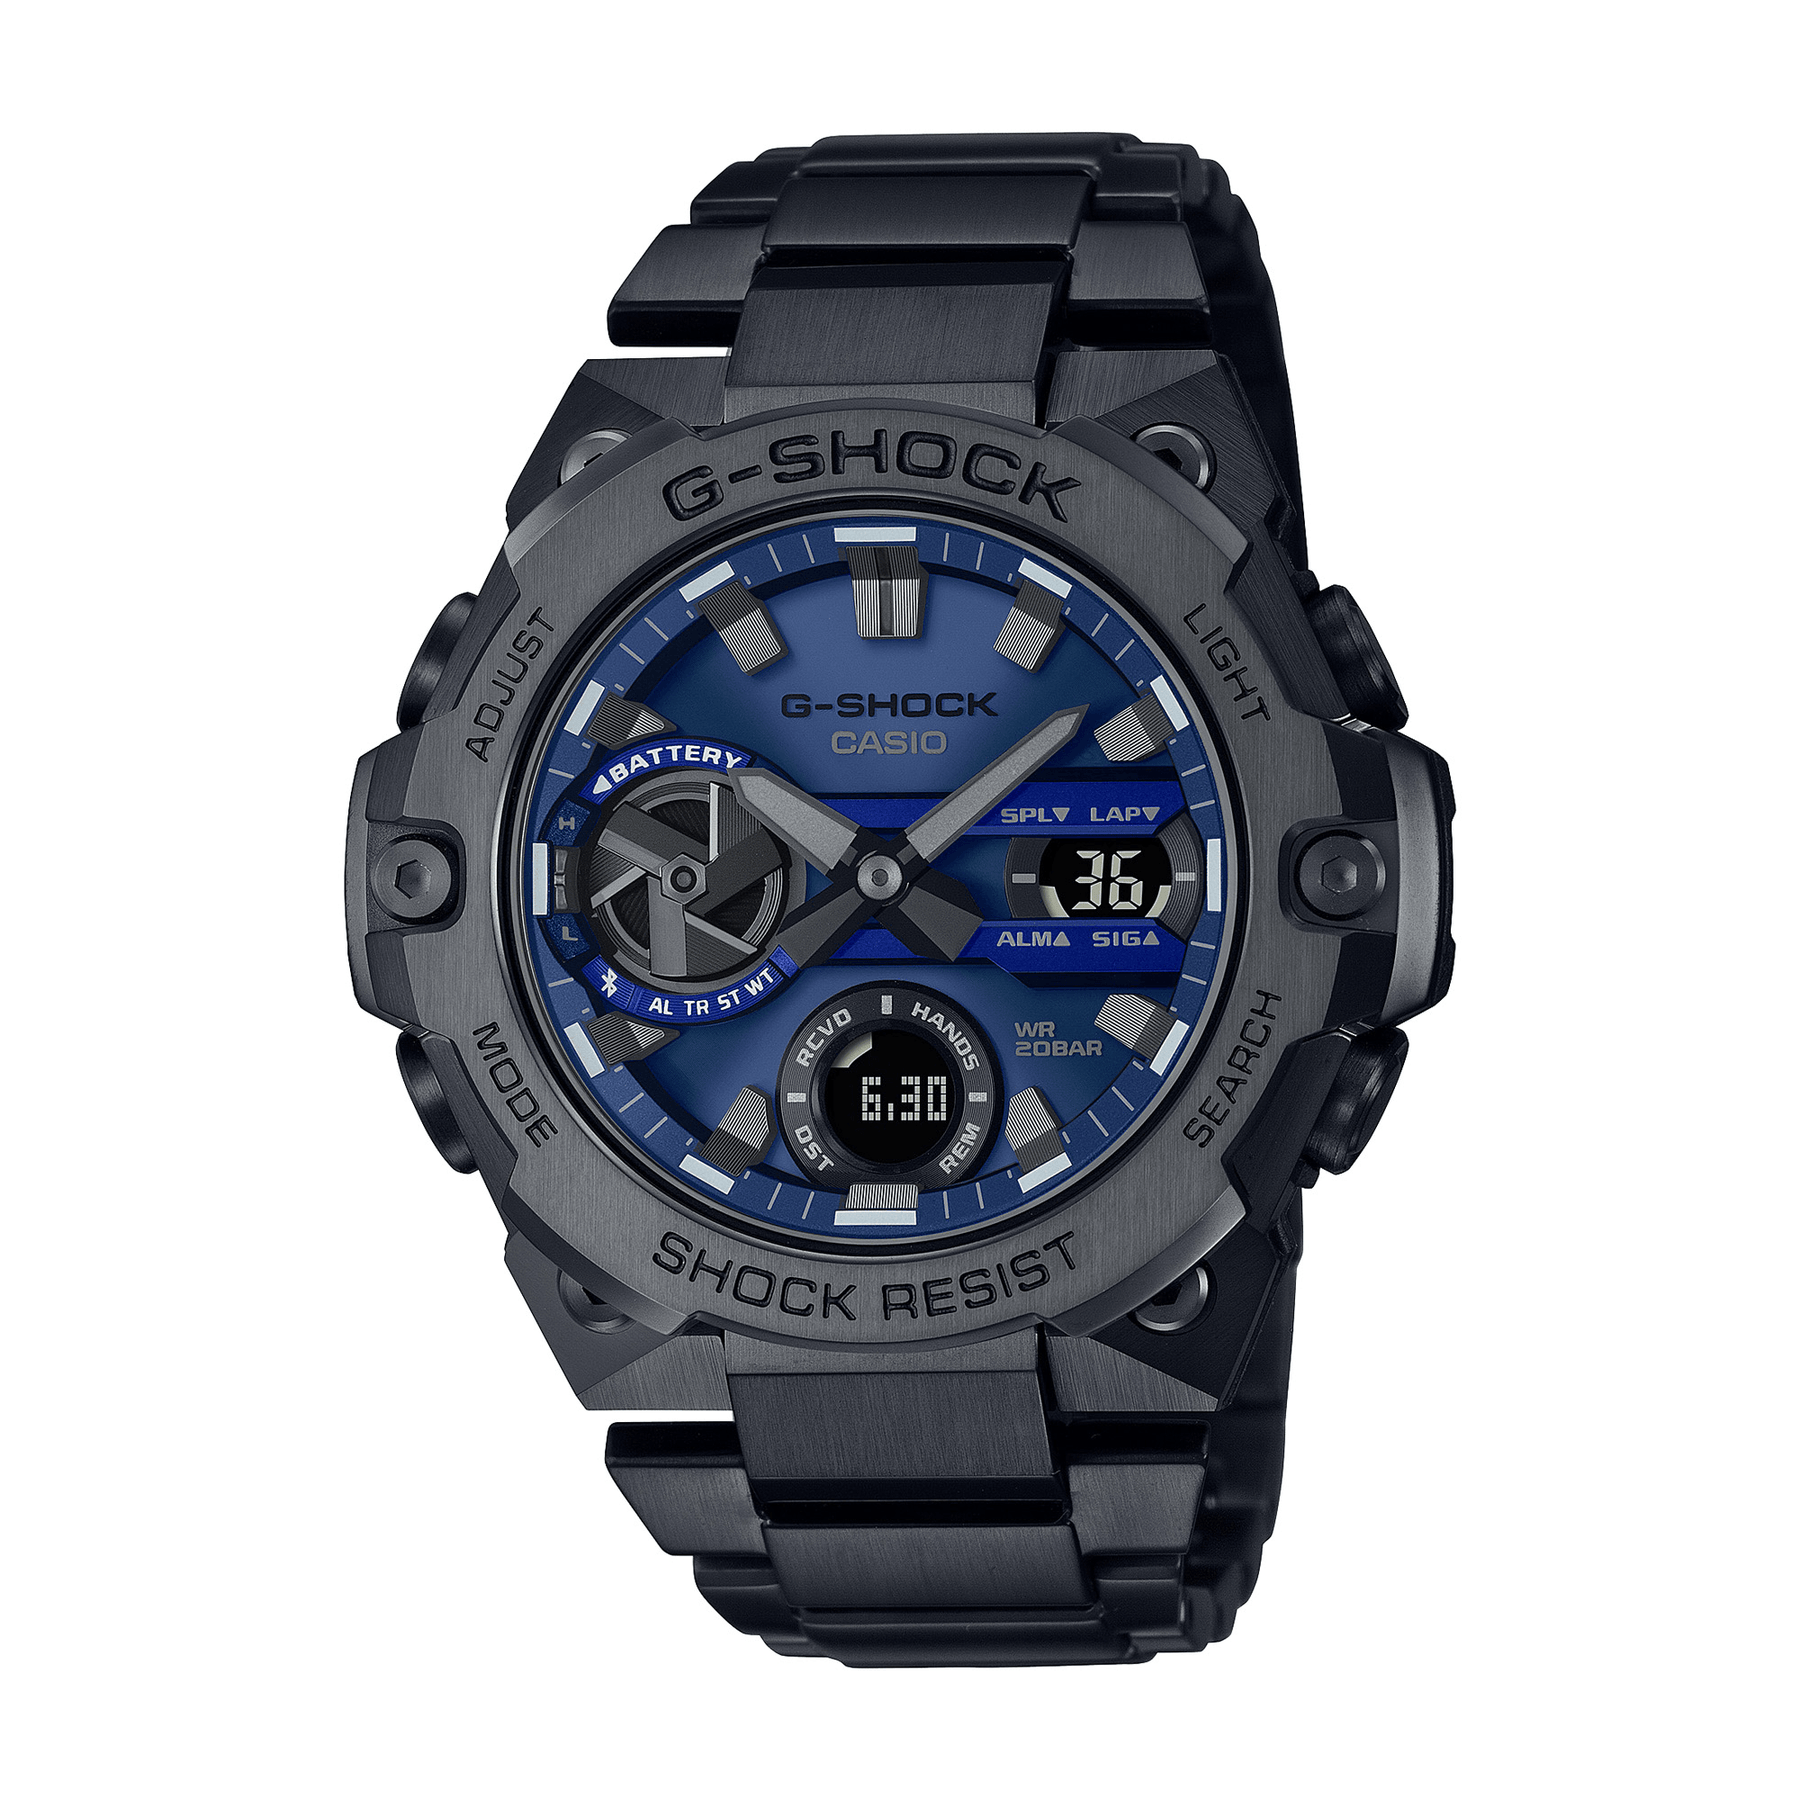 Casio Men's G-Shock Black and Steel Analogue Digital Sport Watch Blue Dial GSTB400BD-1A2 - Wallace Bishop